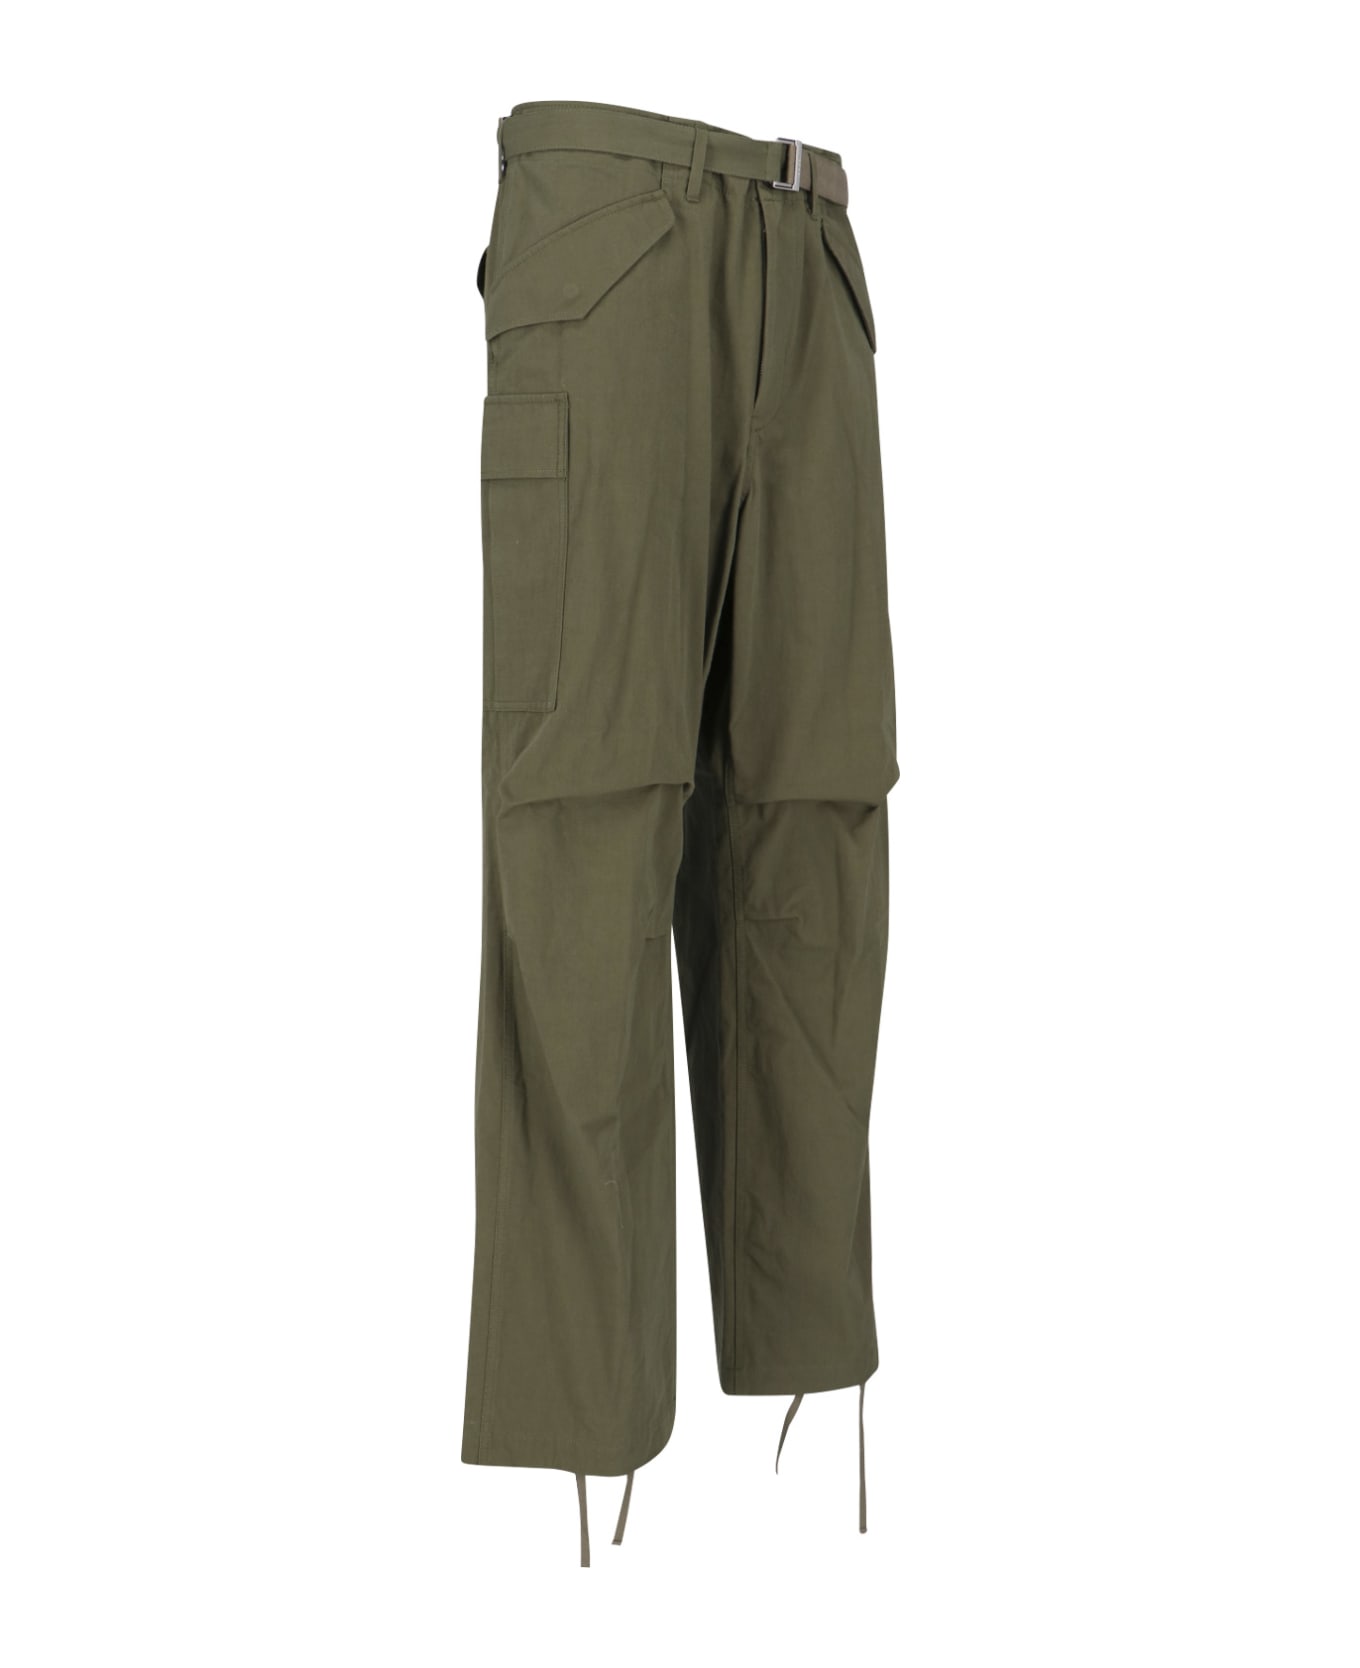 Sacai Belt Detail Pants - Green